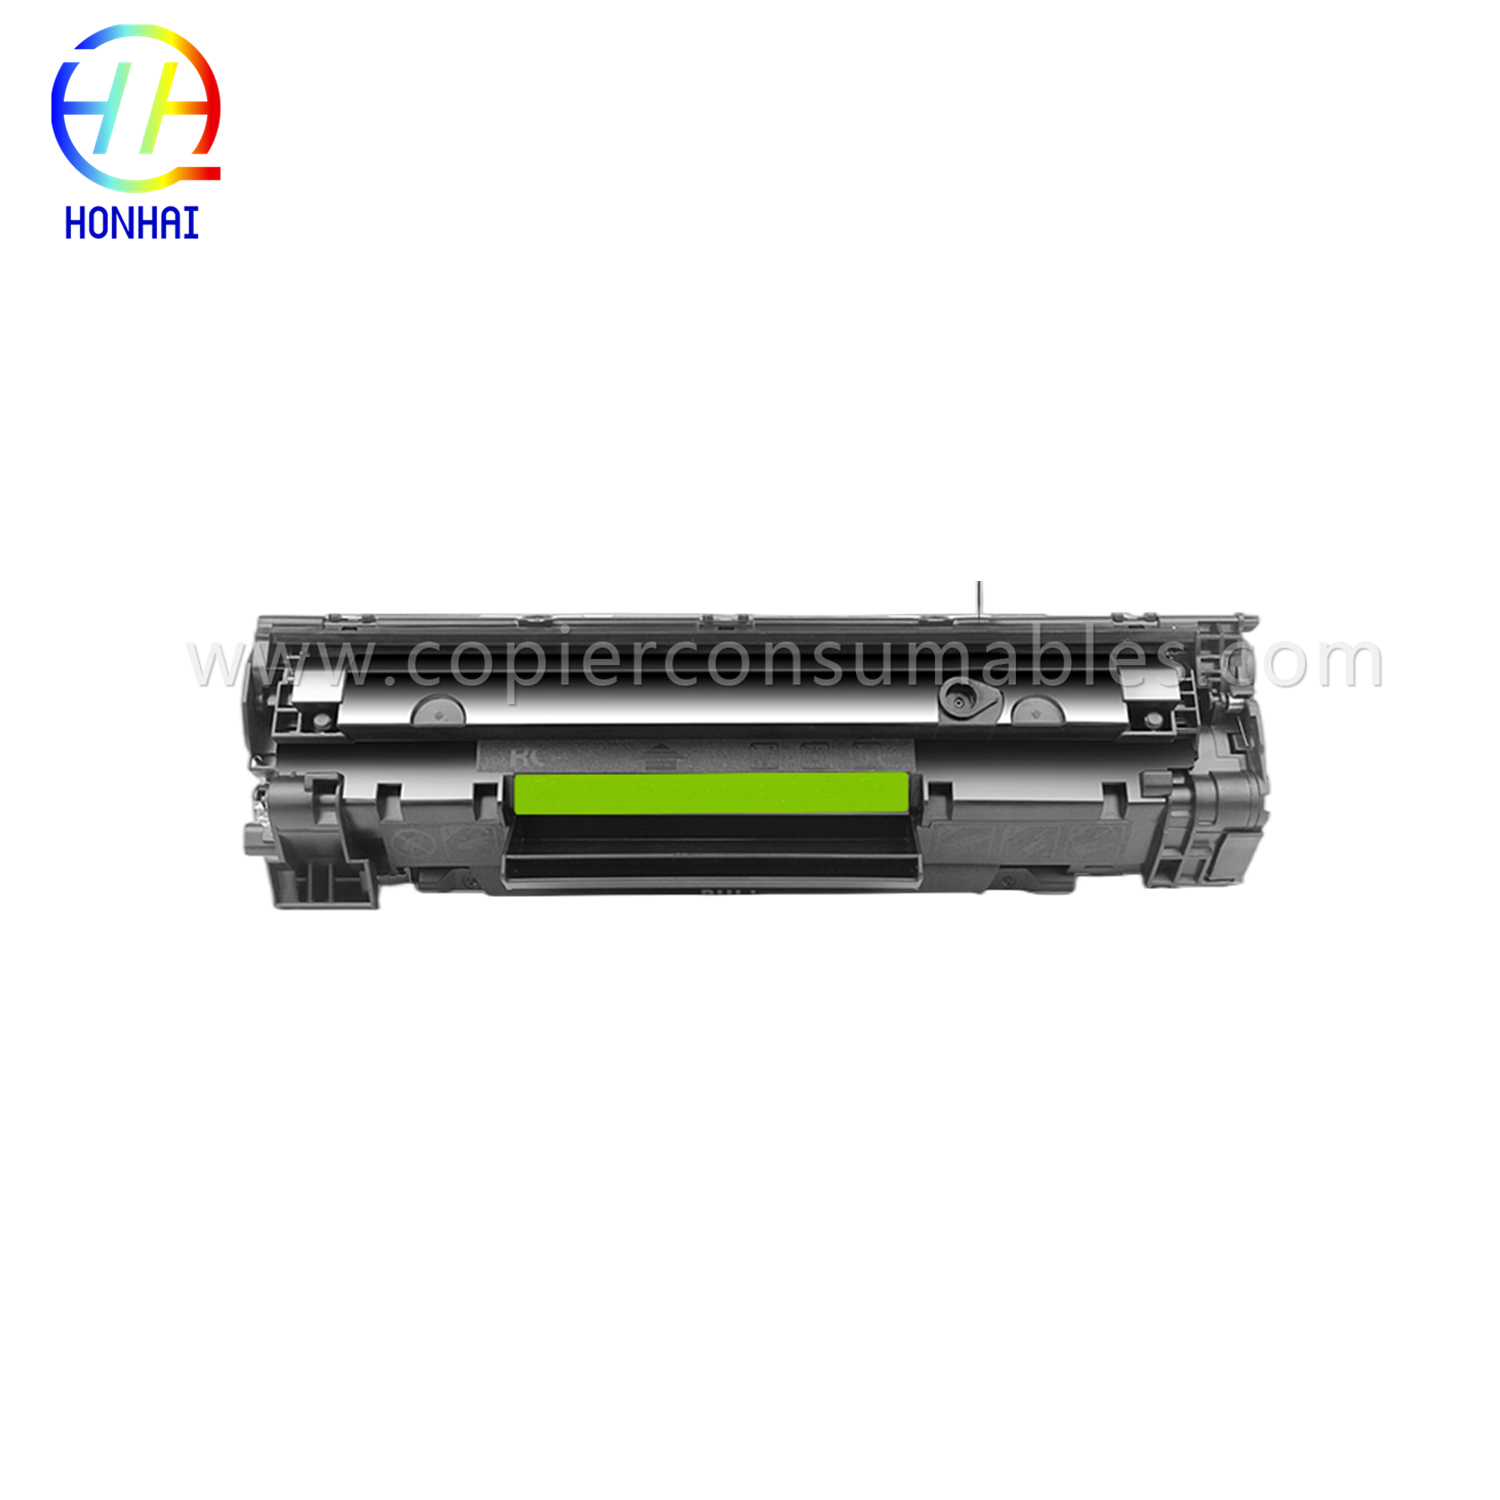 https://www.copierhonhaitech.com/toner-cartridge-for-hp-laserjet-p1005-cb435a-35a-oem-product/